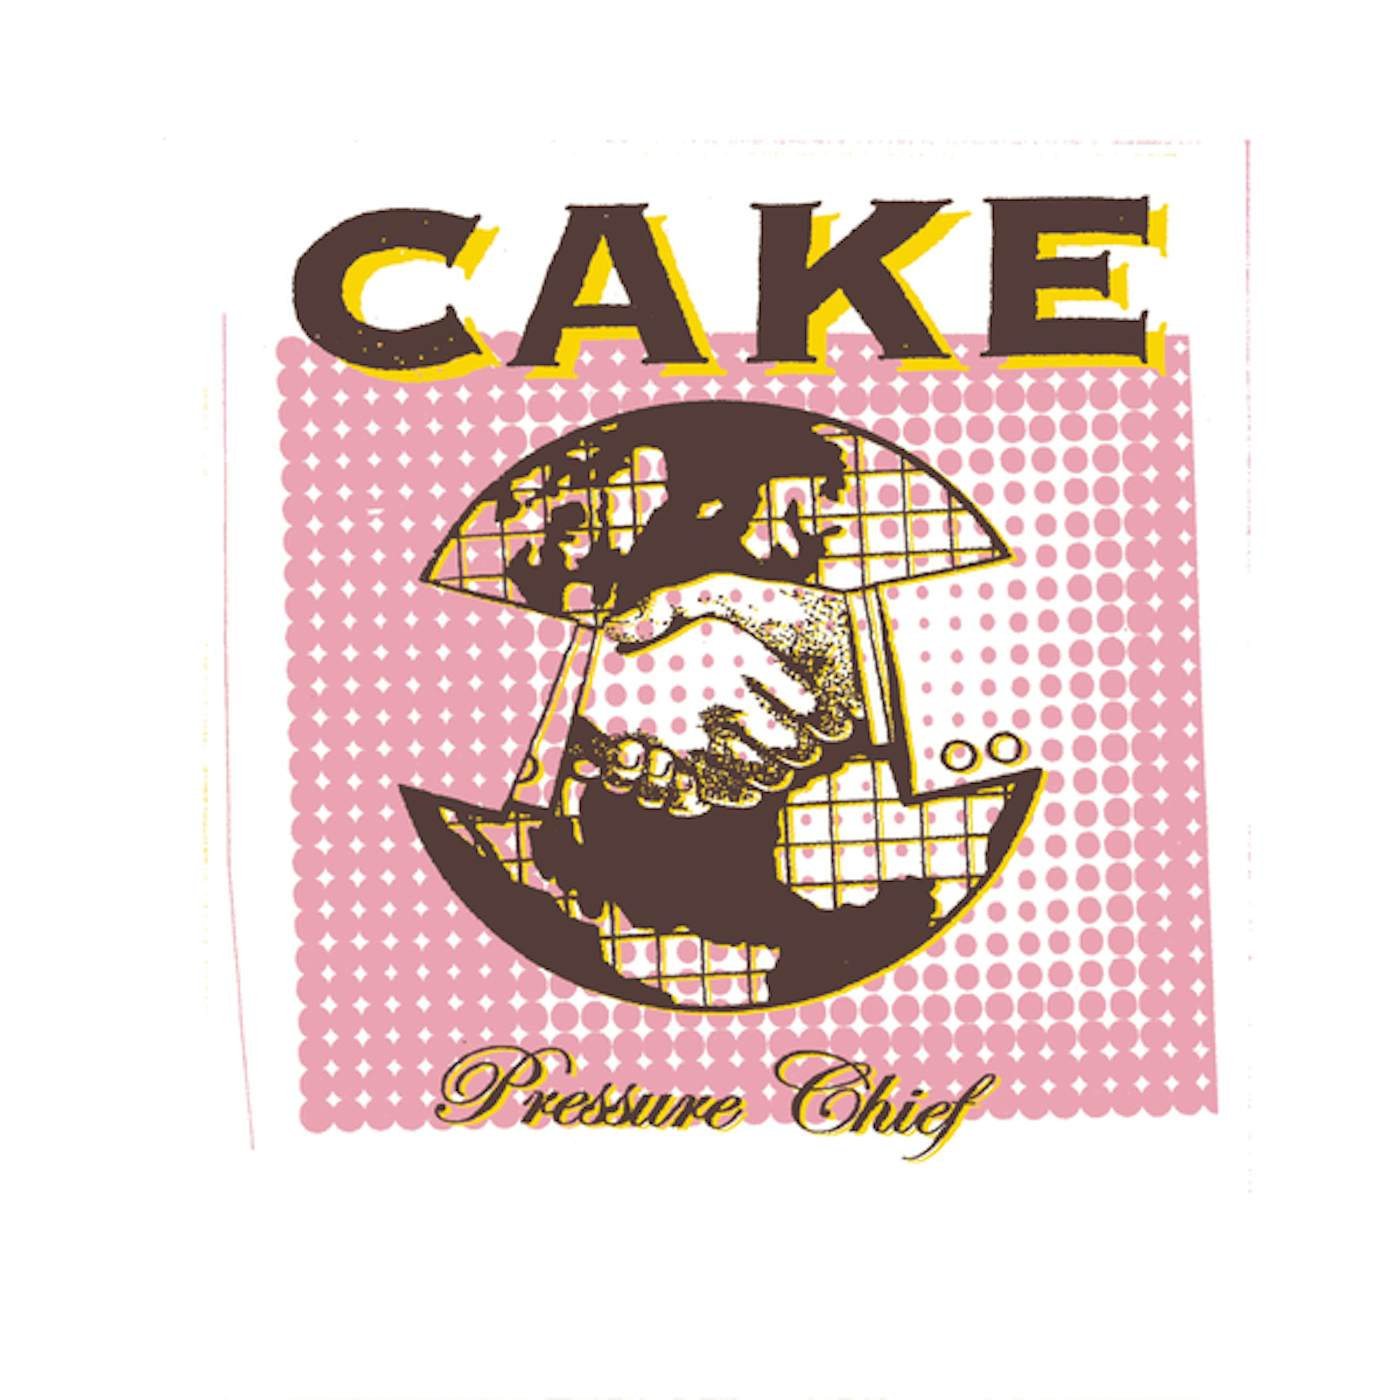 CAKE PRESSURE CHIEF CD